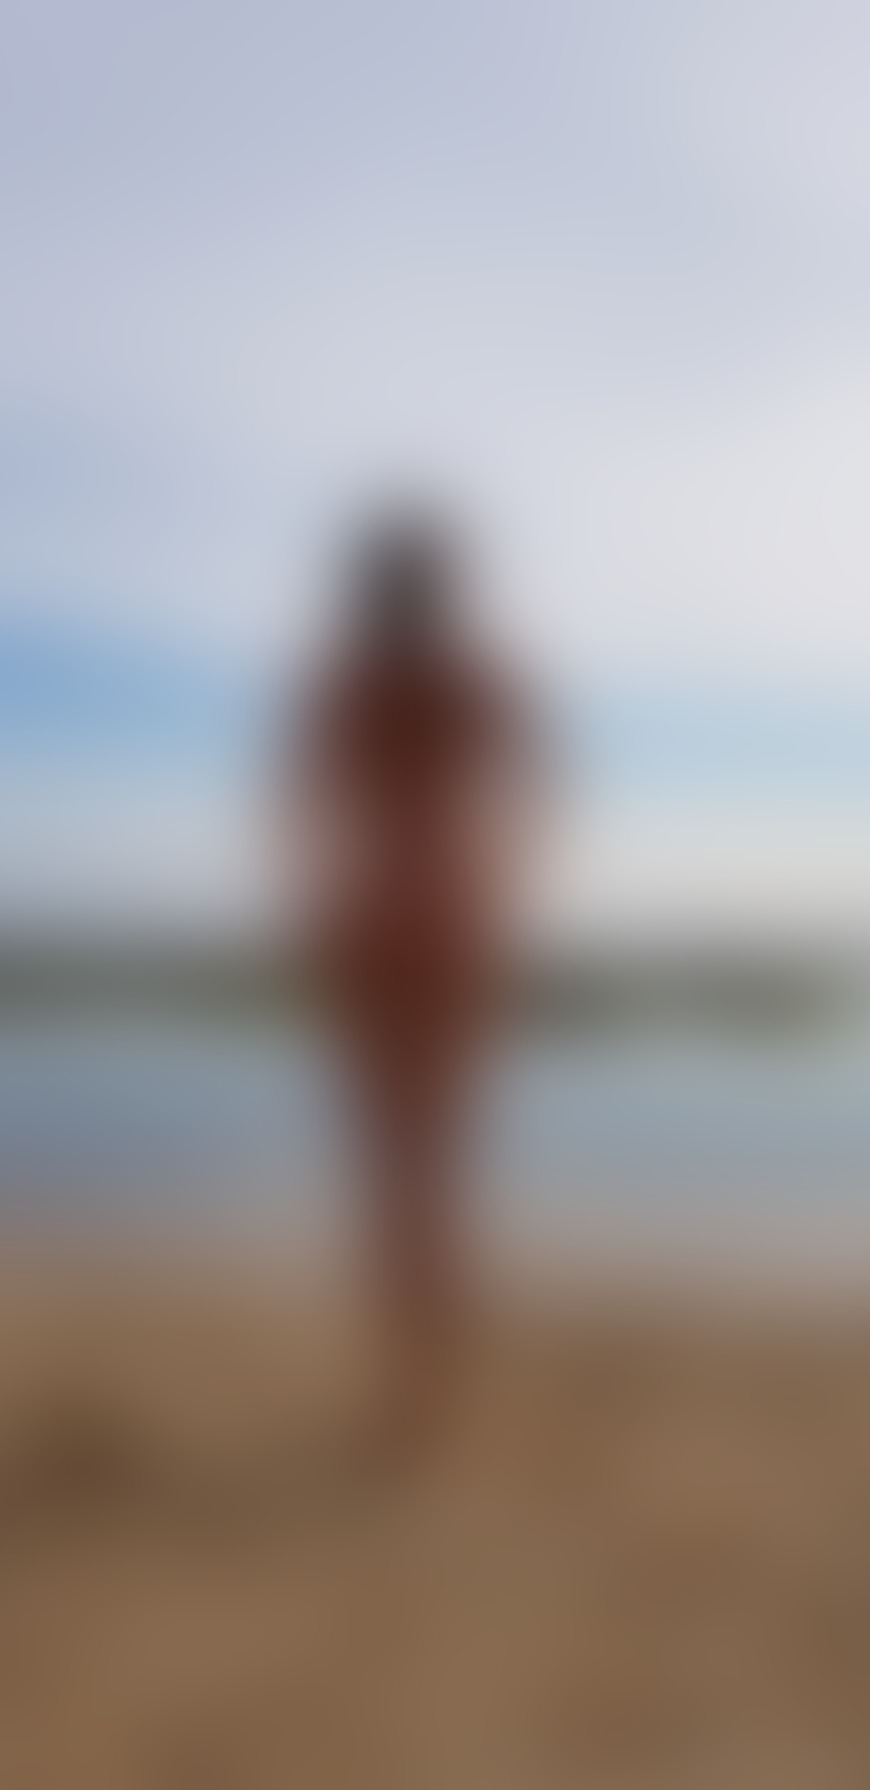 Nude on the beach - post hidden image